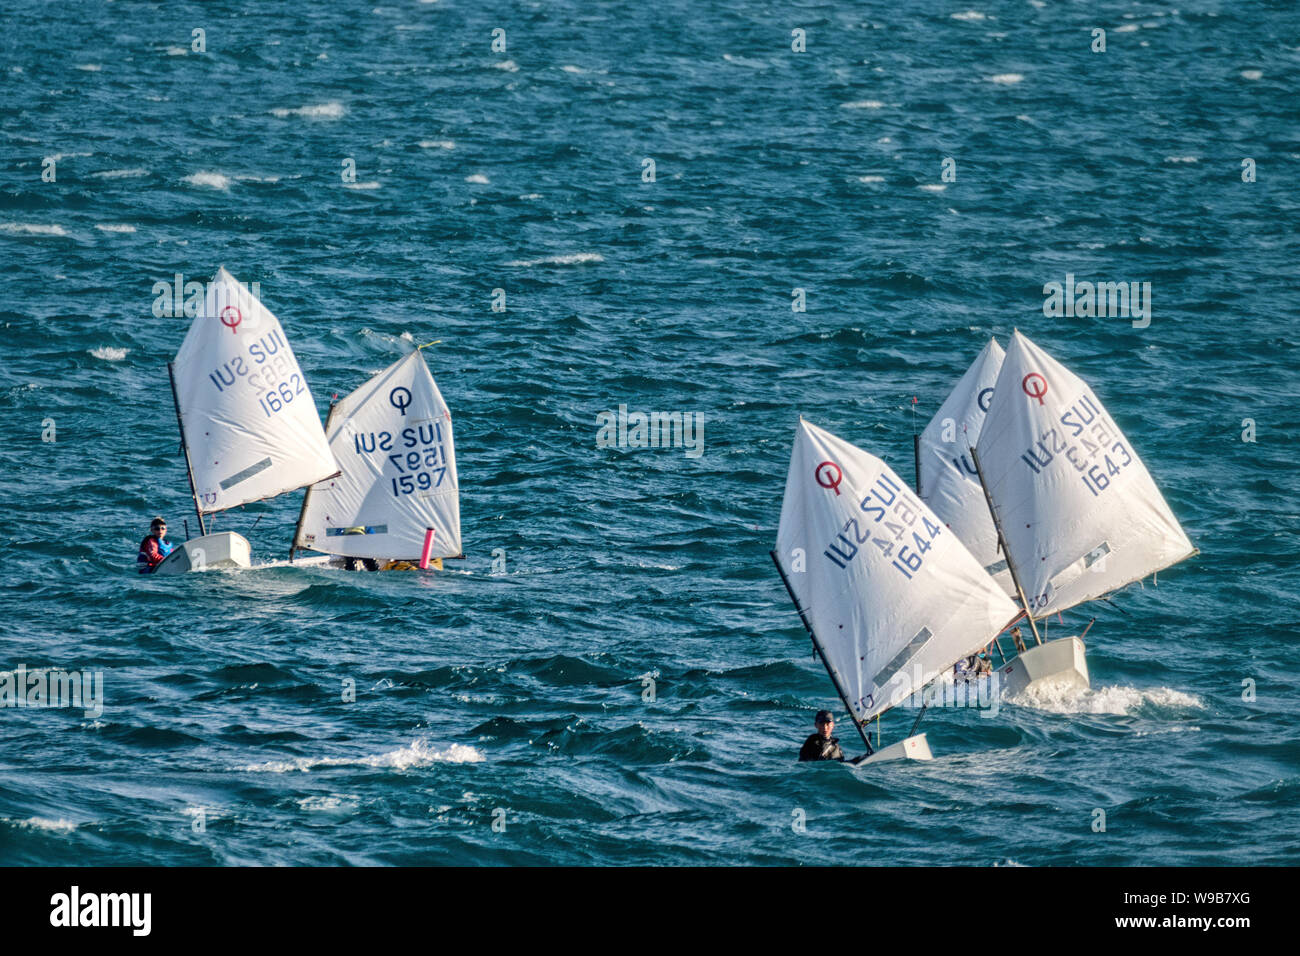 Children sailing Optimist dinghies in big waves Stock Photo